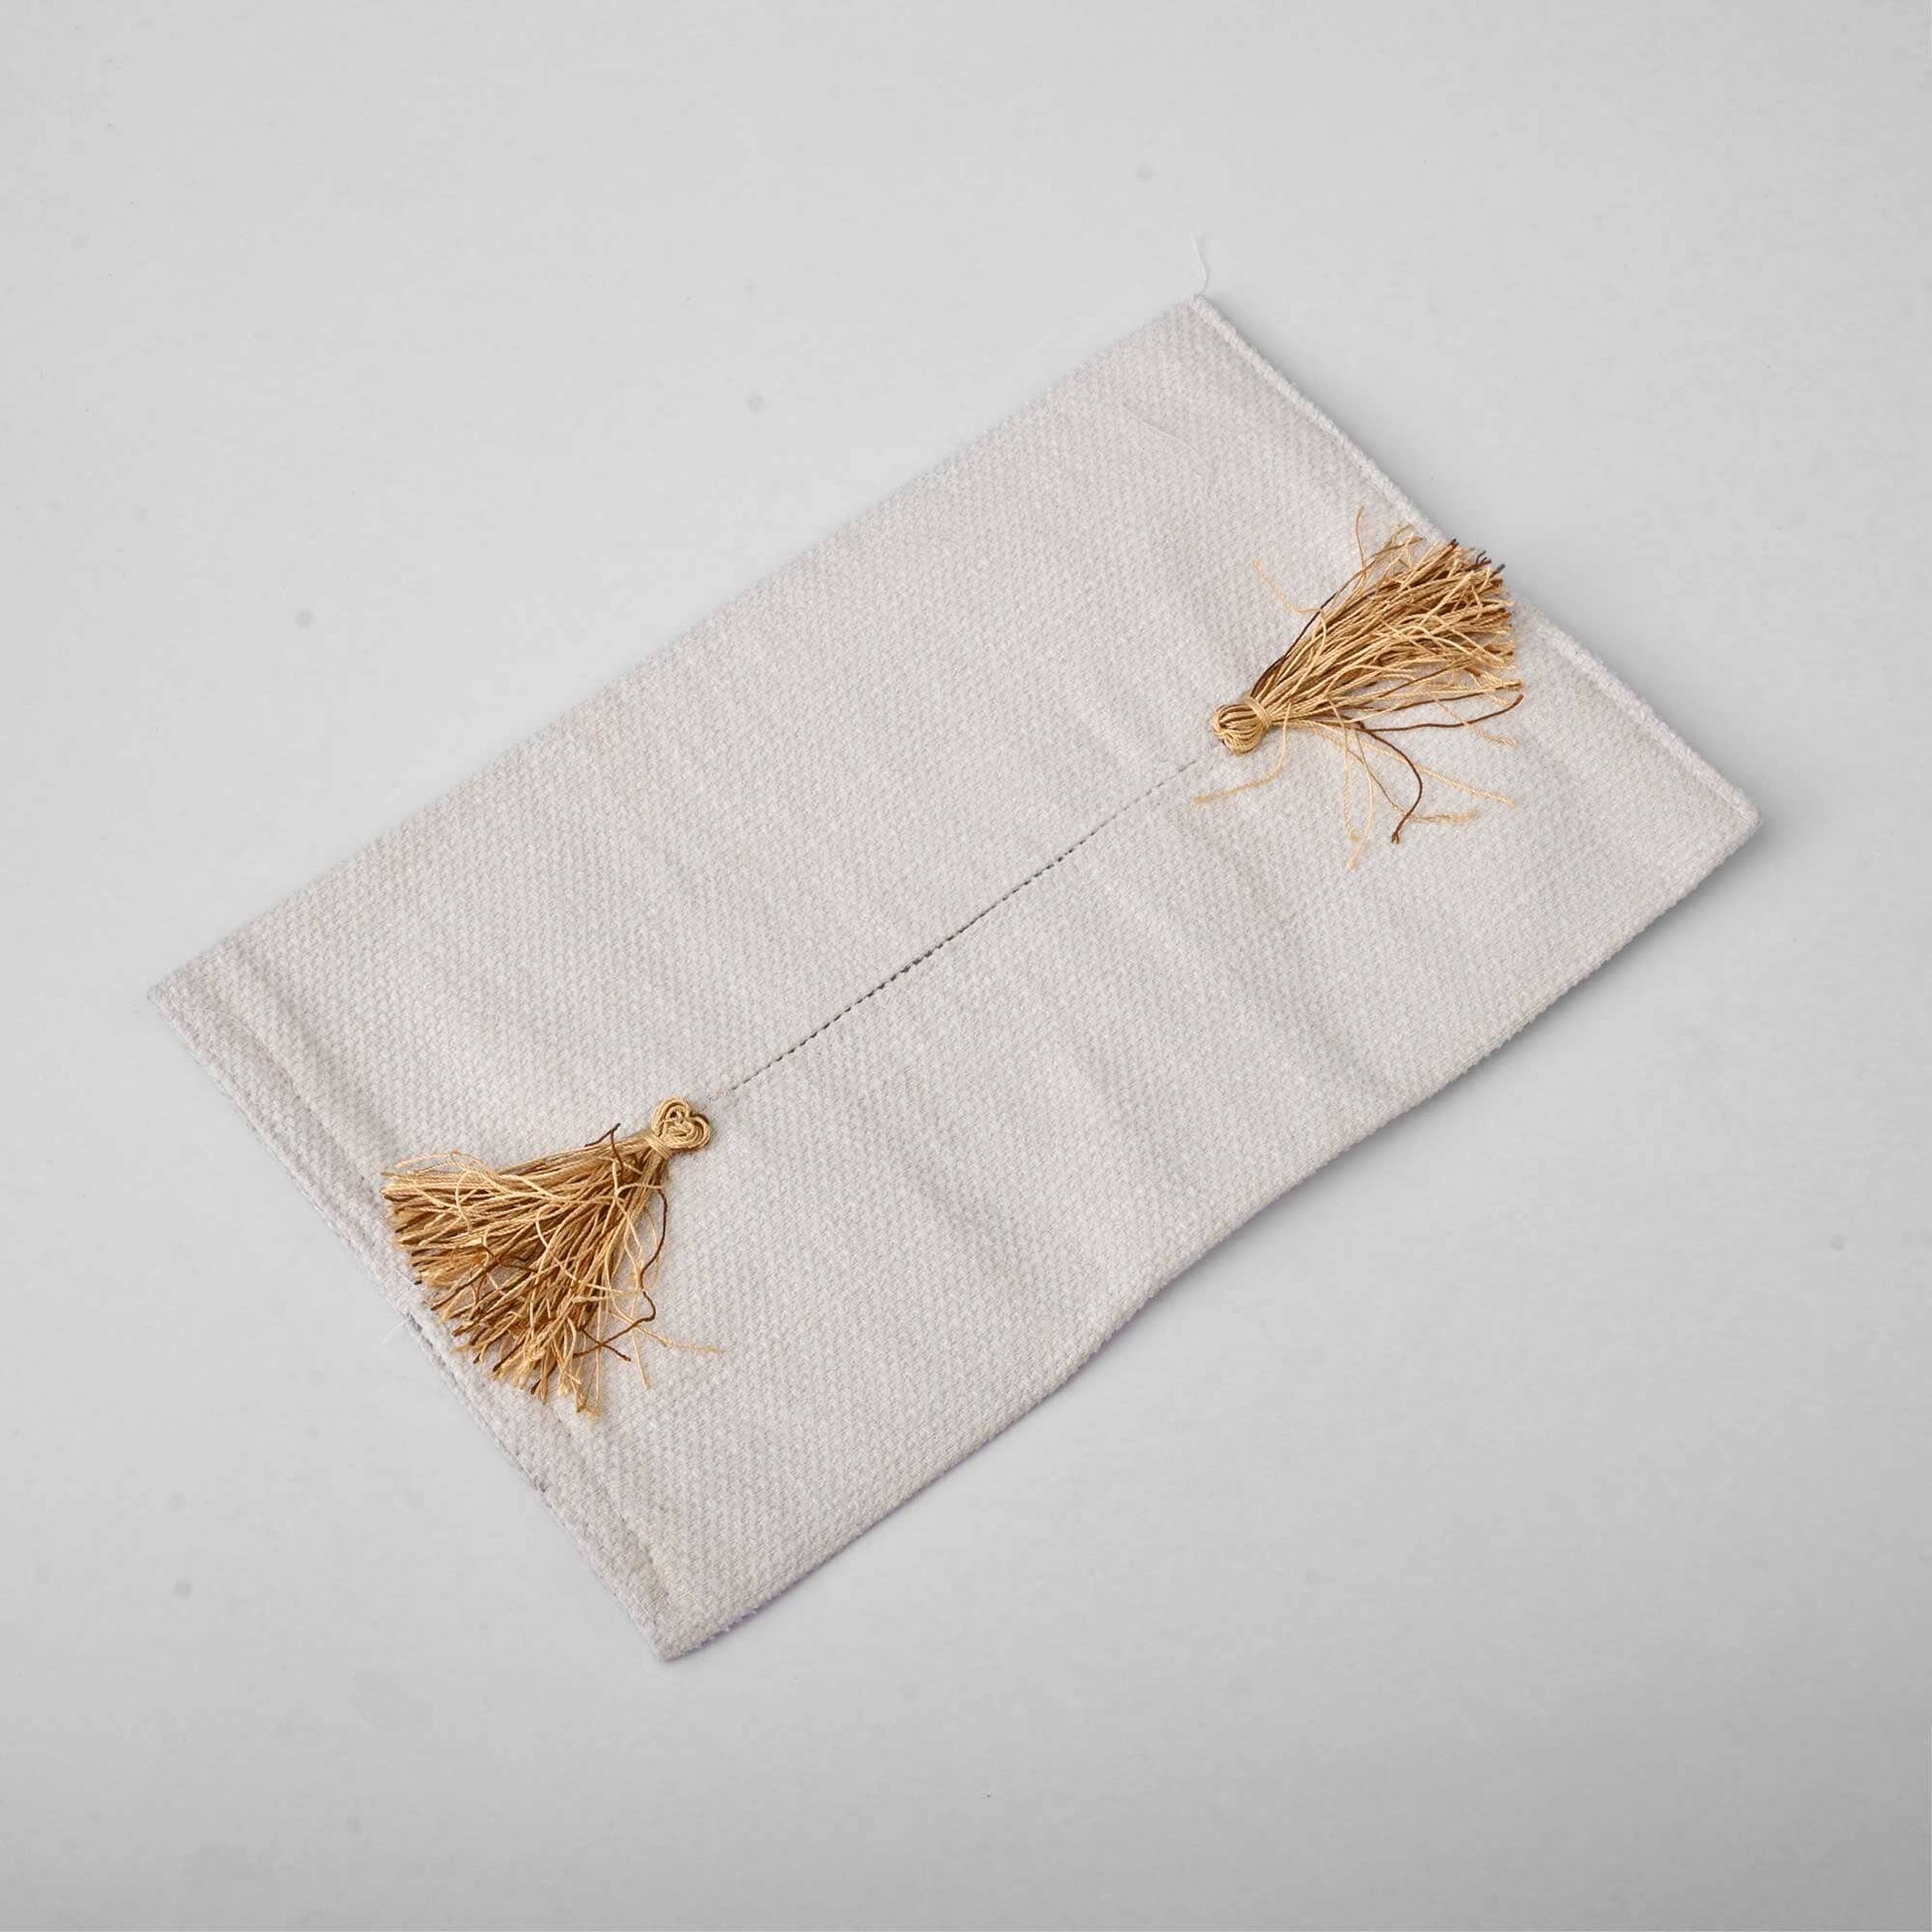 Fabric Tissue Box Cover General Accessories De Artistic D4 